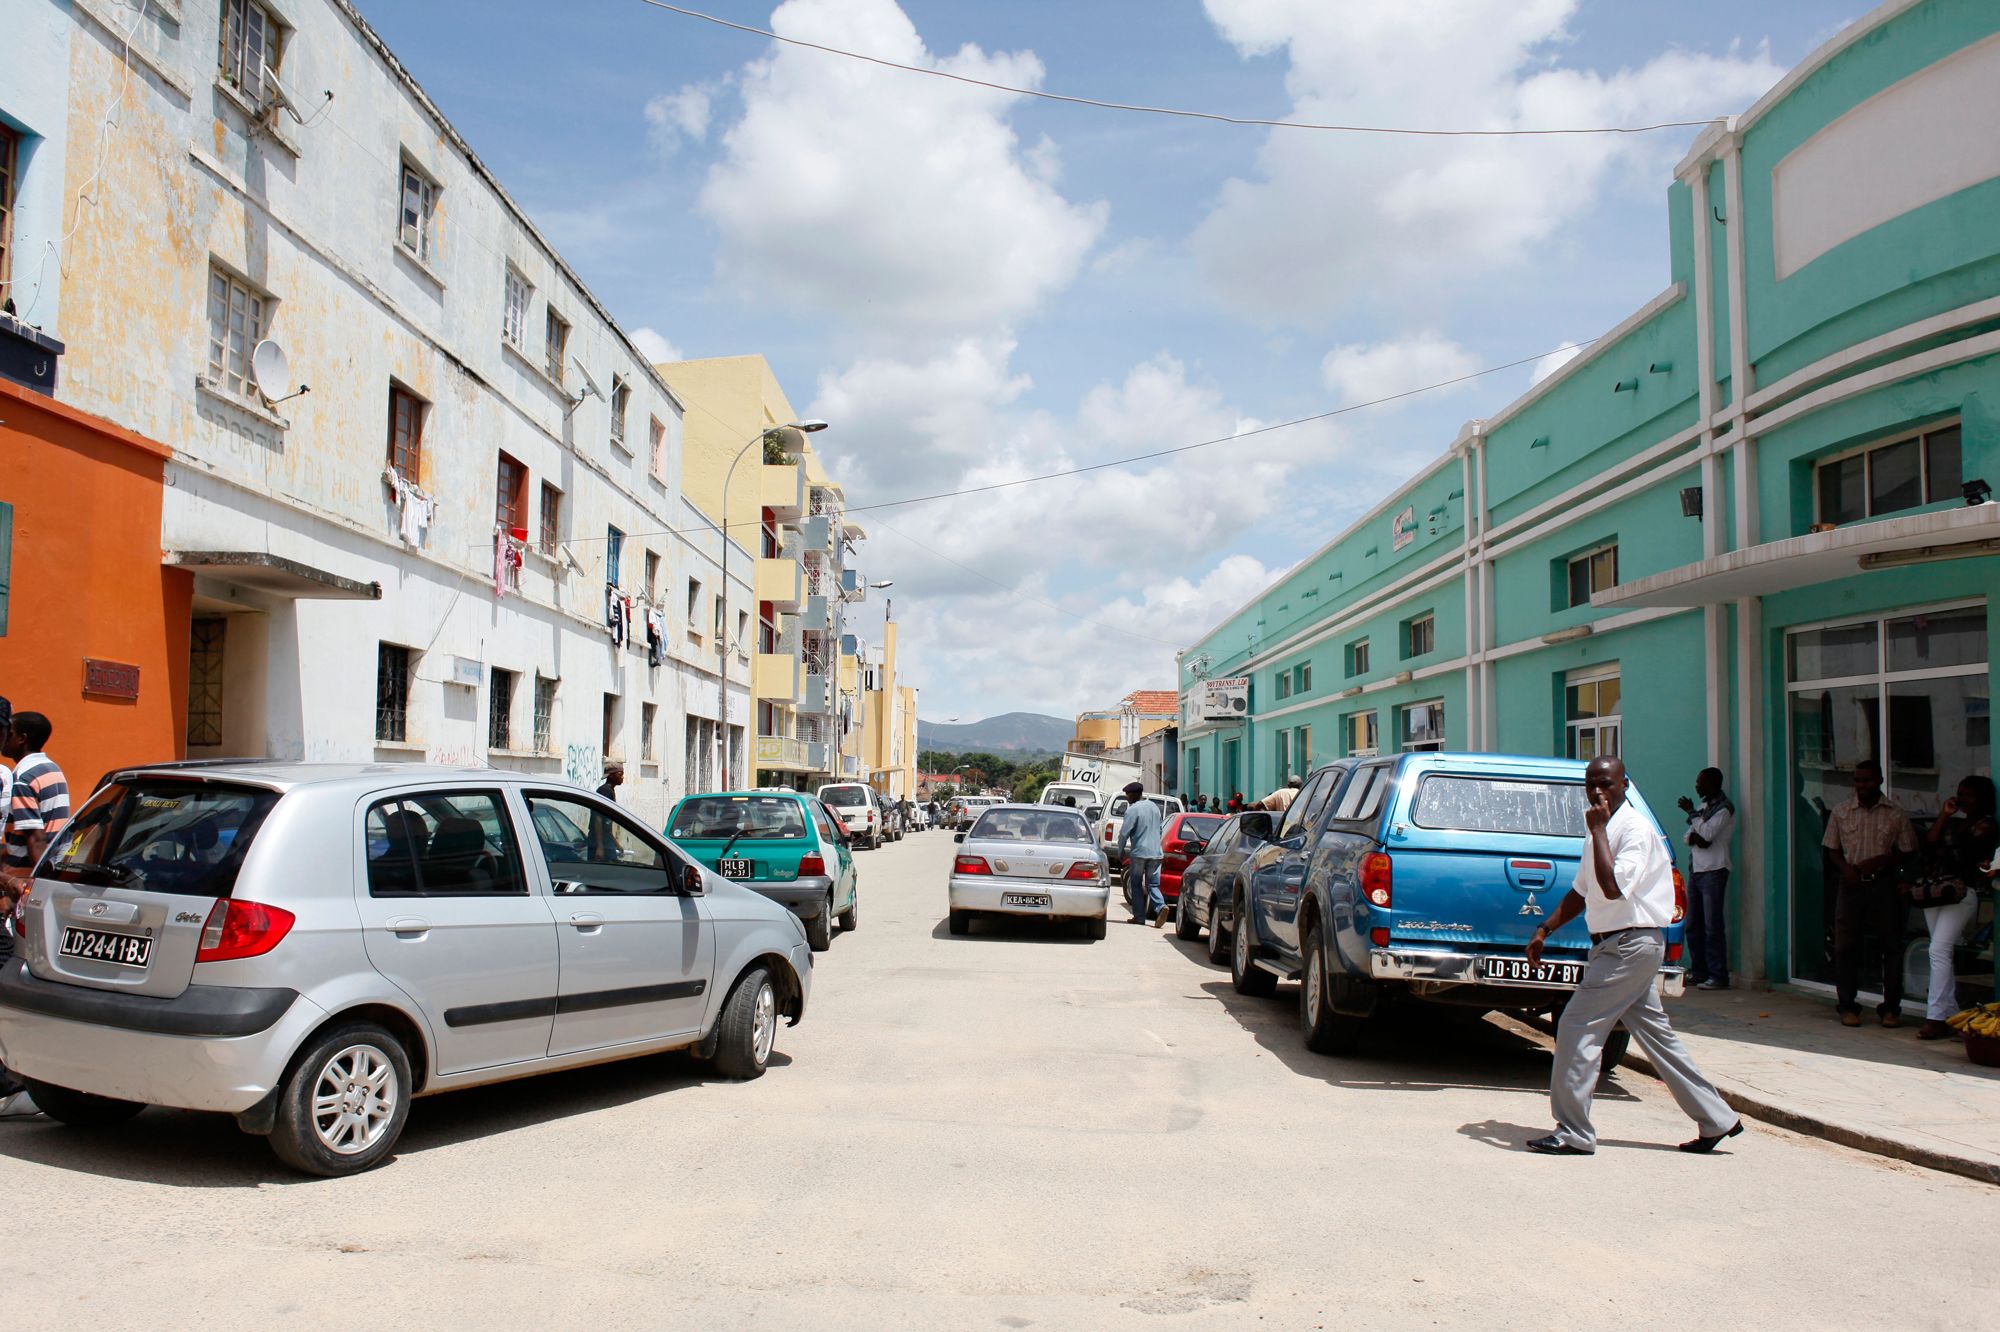 BJTBR3 Street scene from the city of Lubango, Huila Province, Angola, Africa